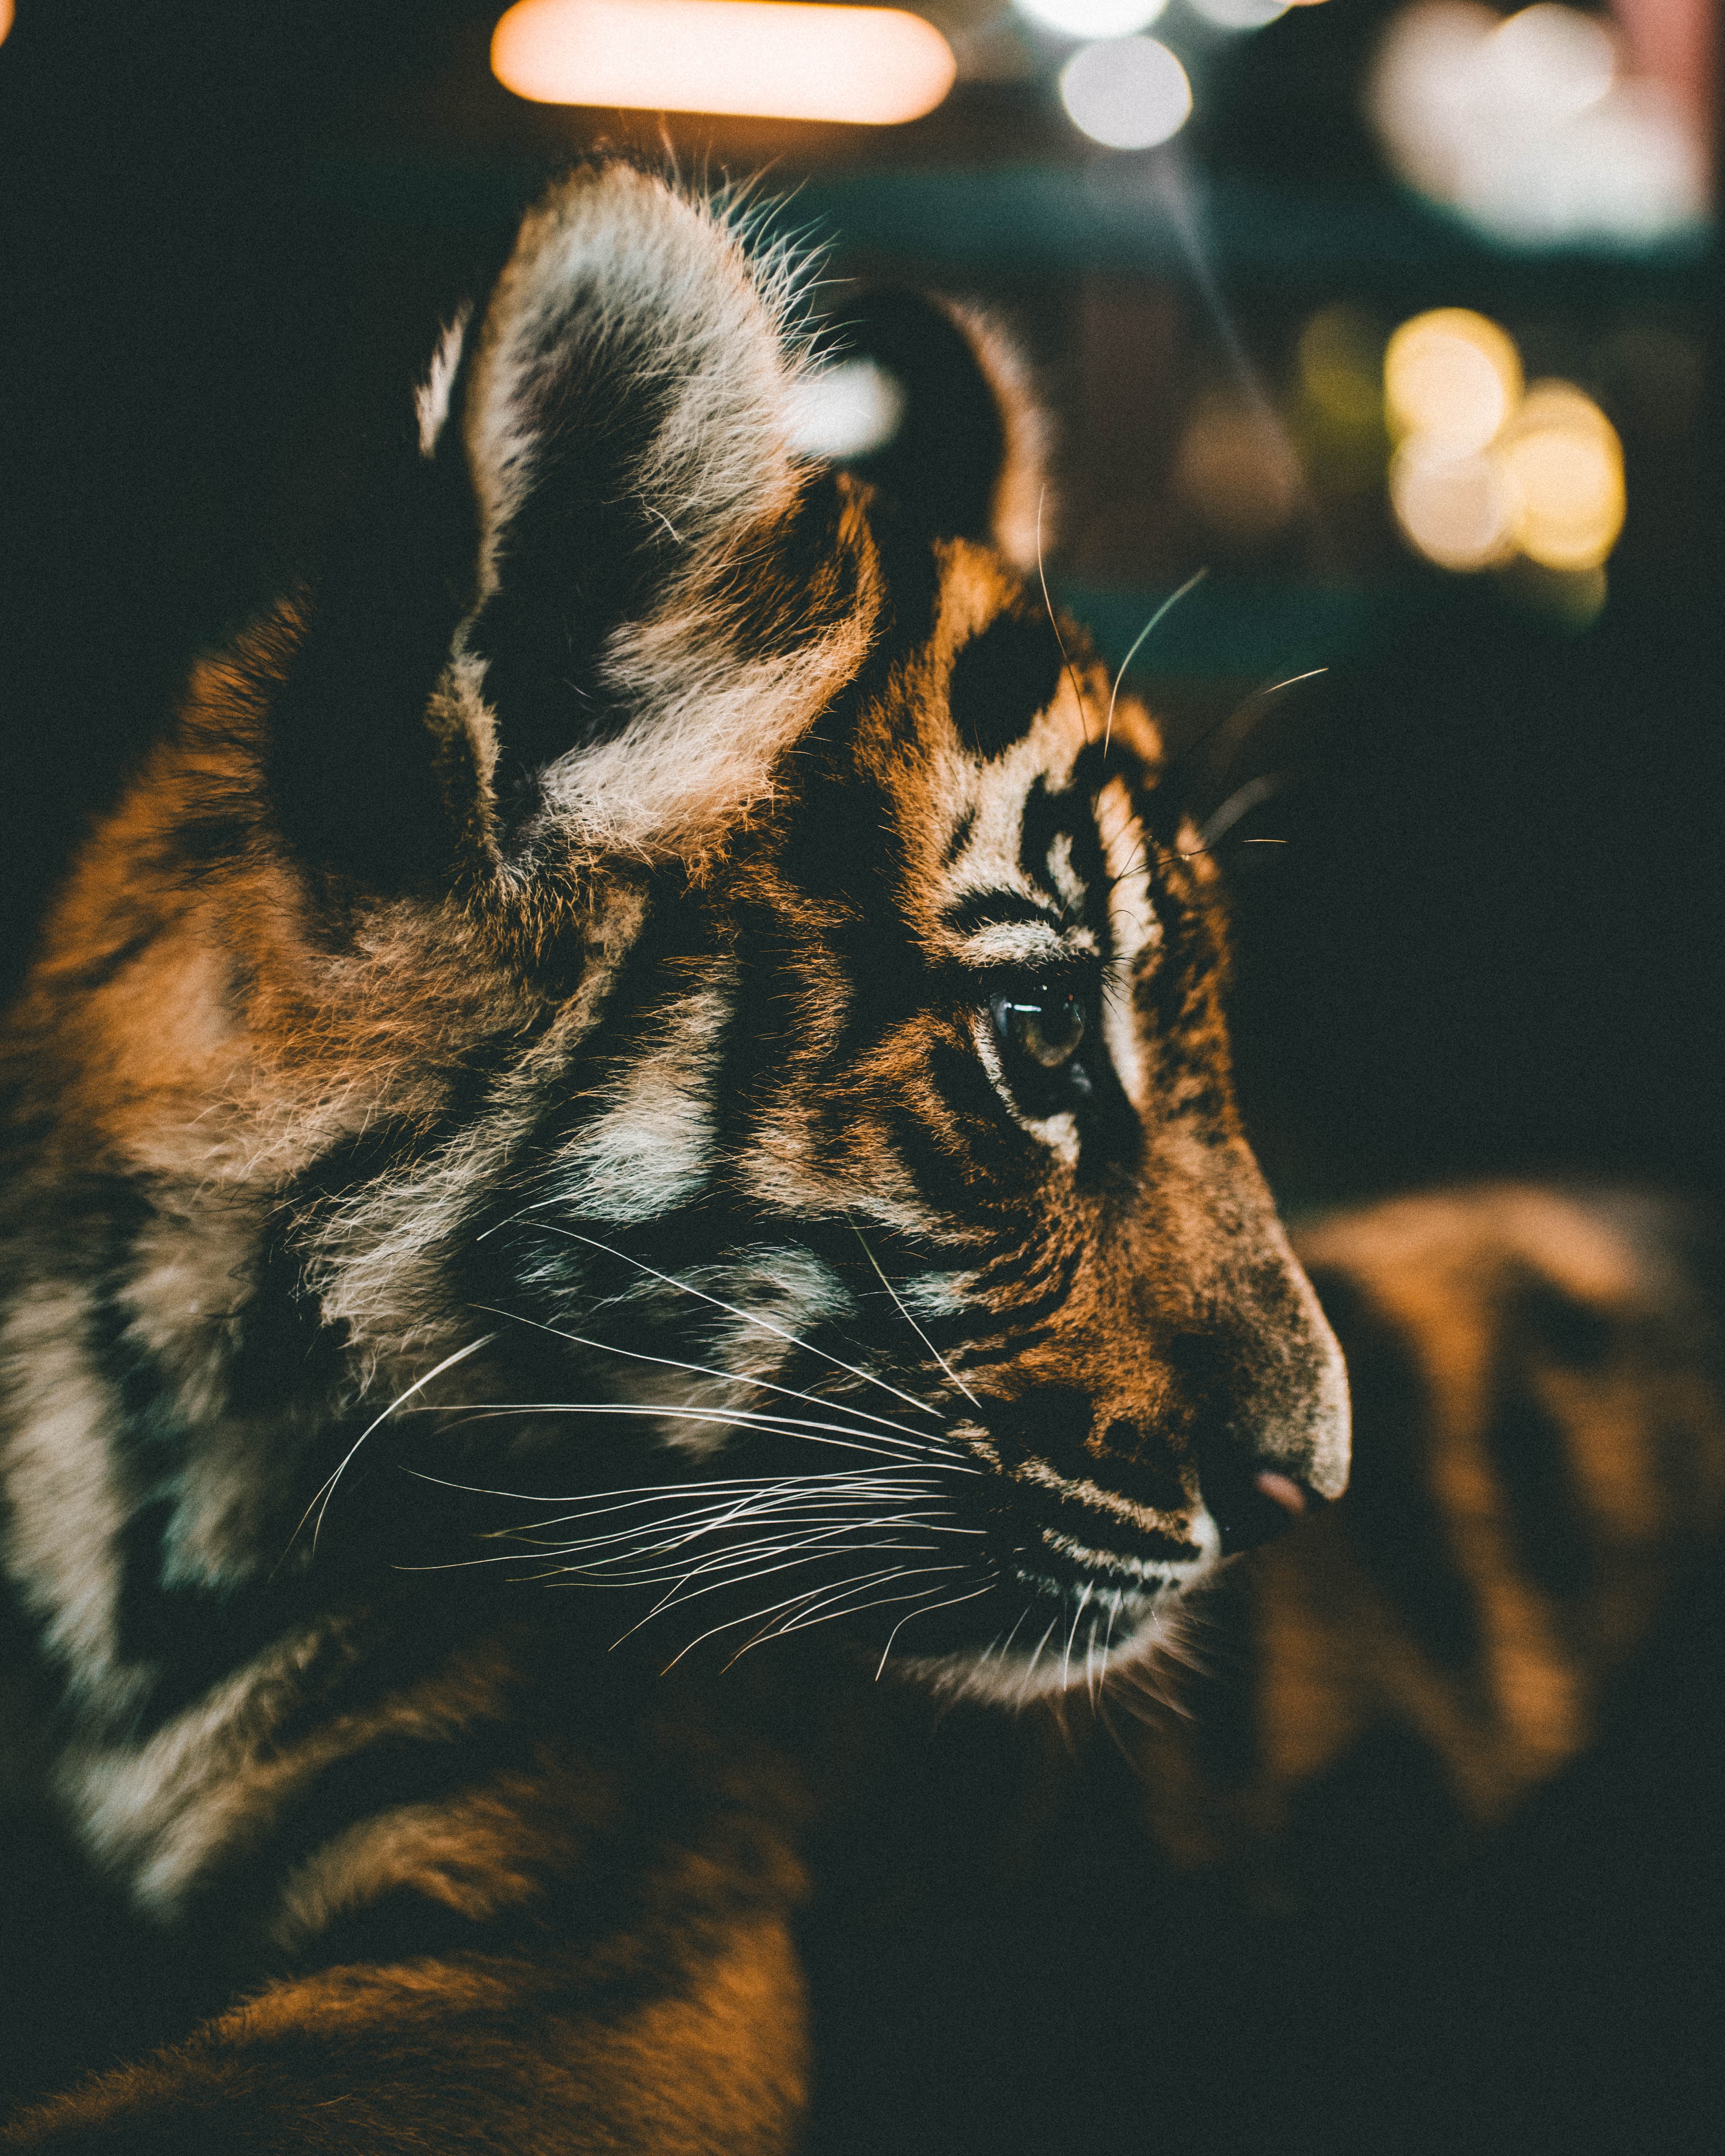 Popular Tiger Cub Image for Phone